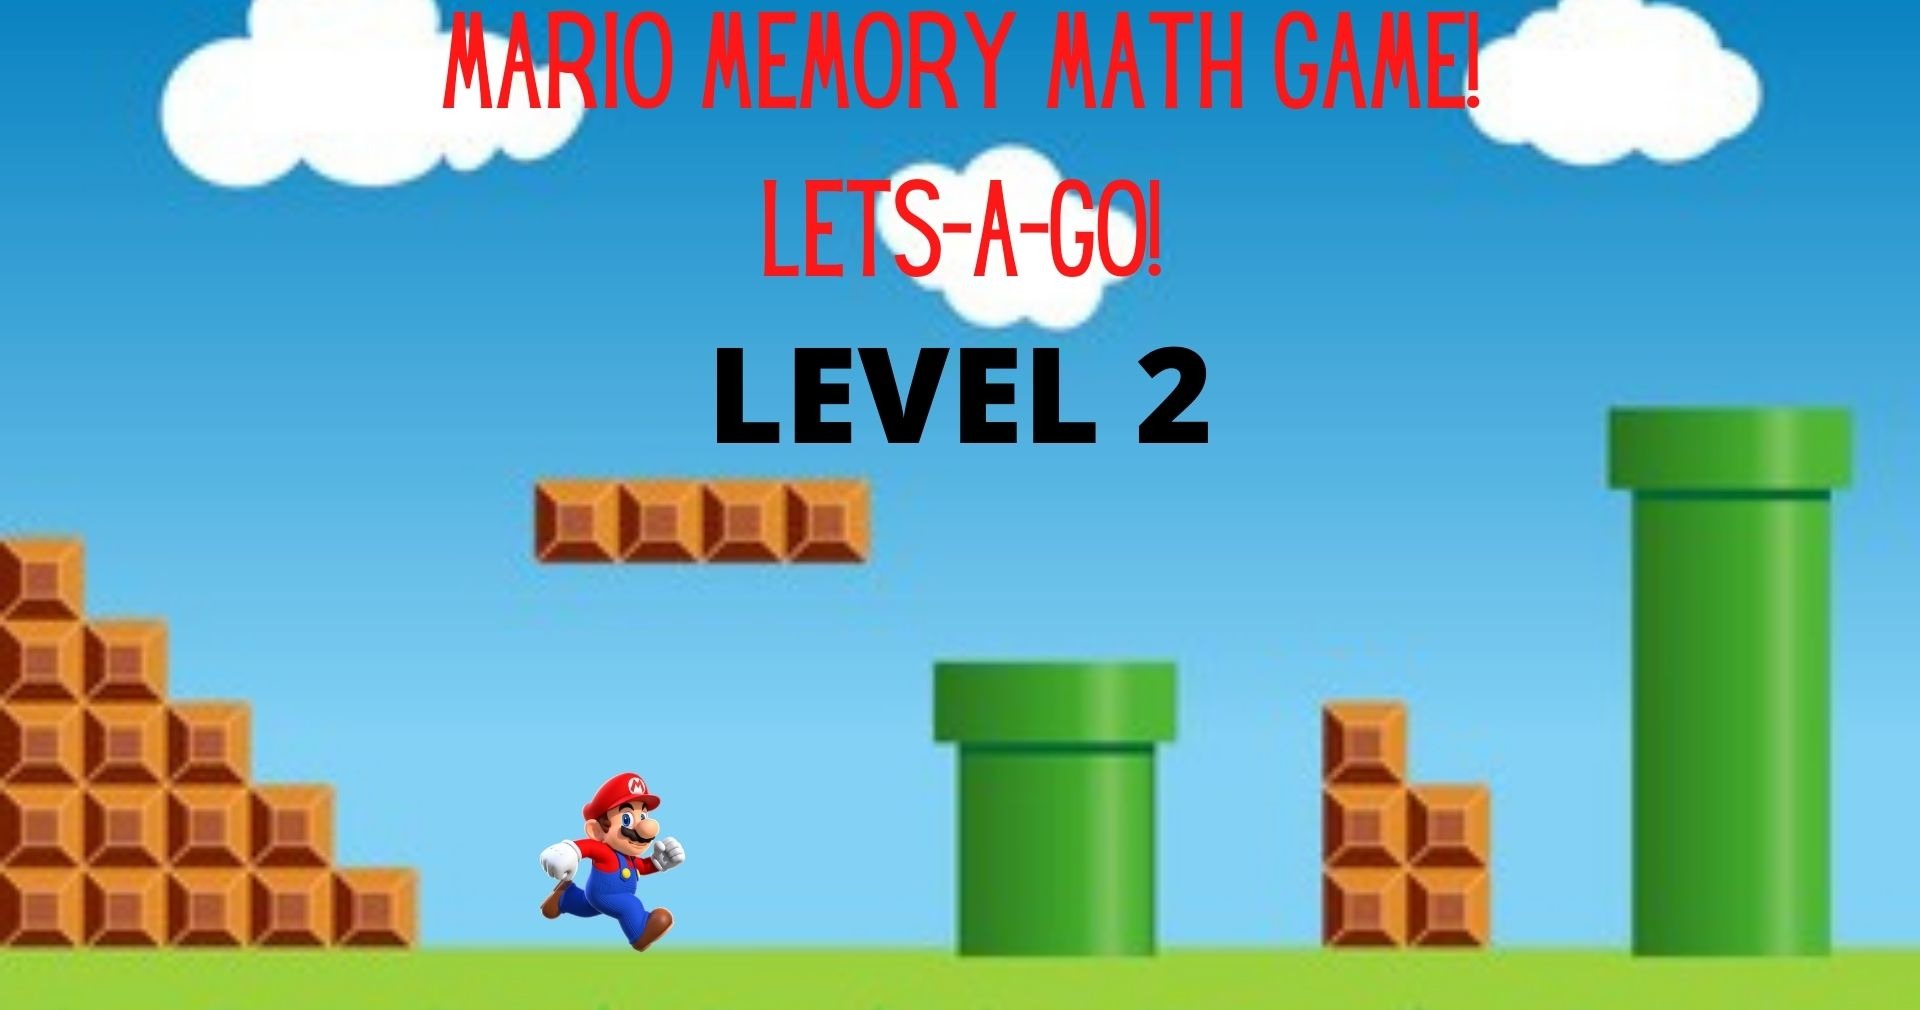 Super Mario Memory Math Game Addition! LEVEL 2! Lets-A-Go!